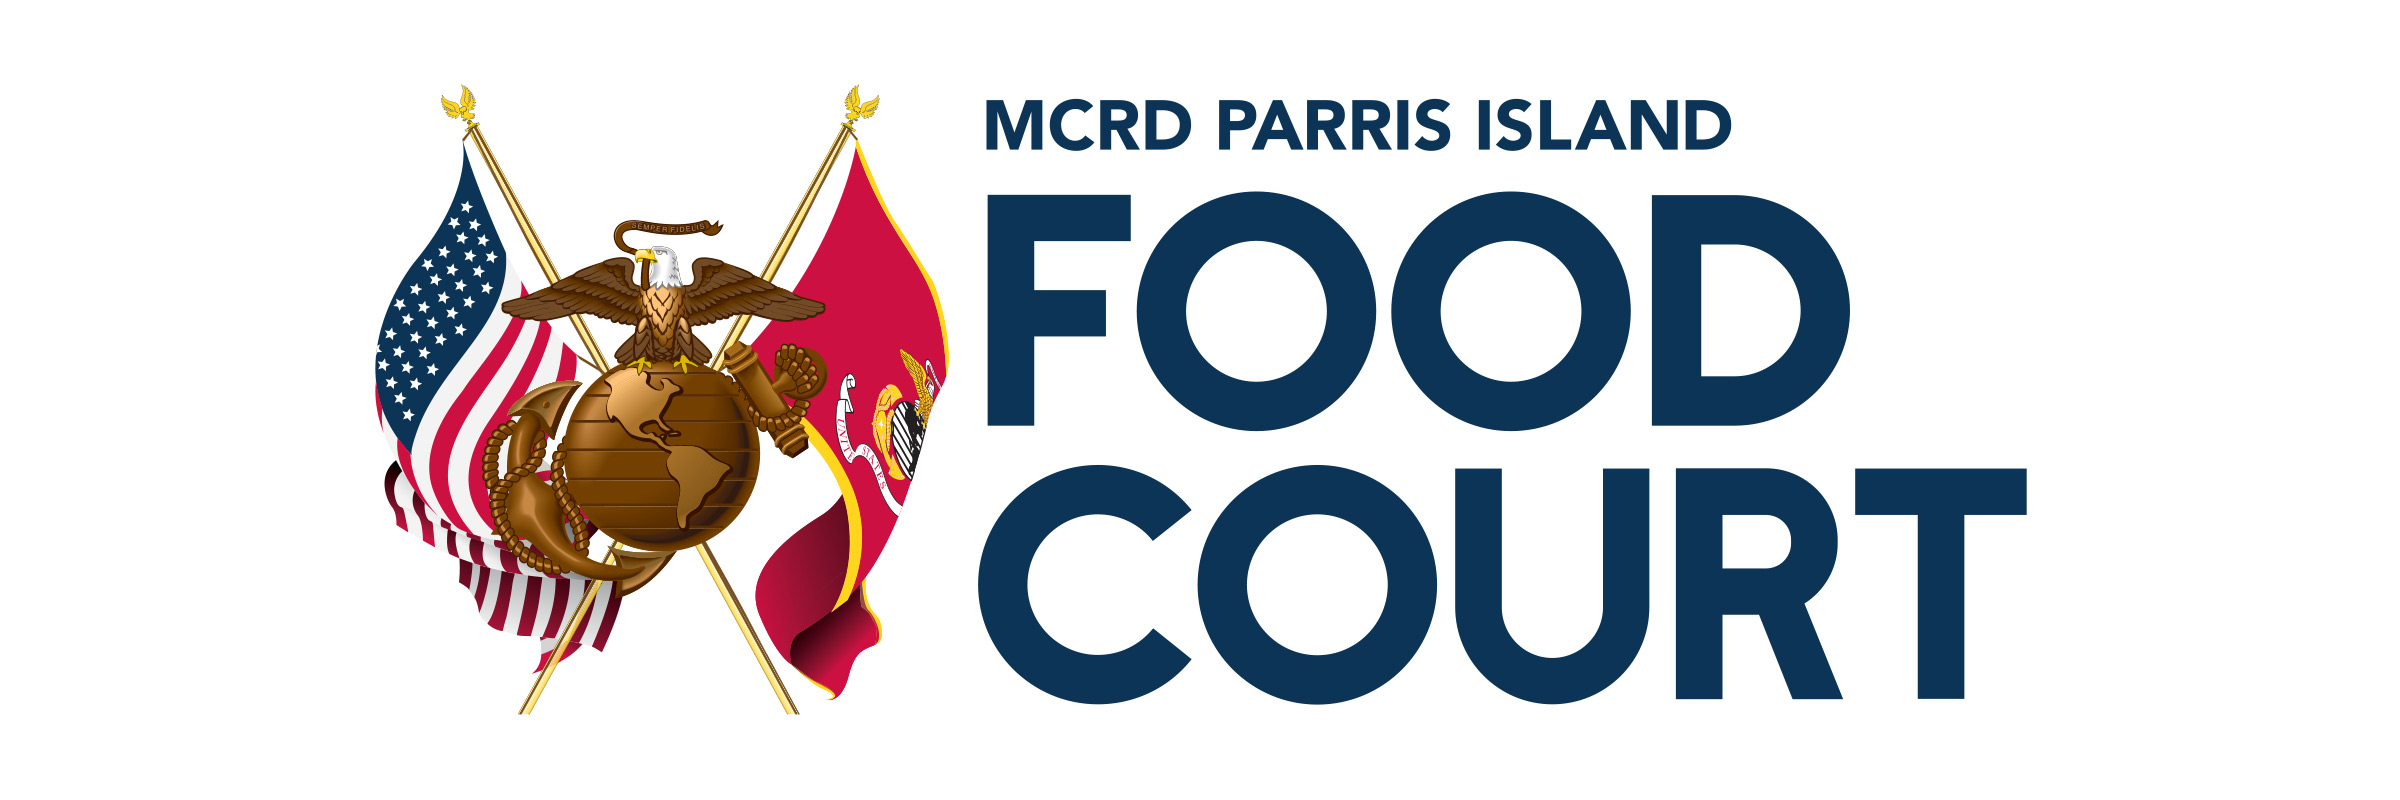 MCRD-Parris-Island-Food-Court-HiRez.jpg